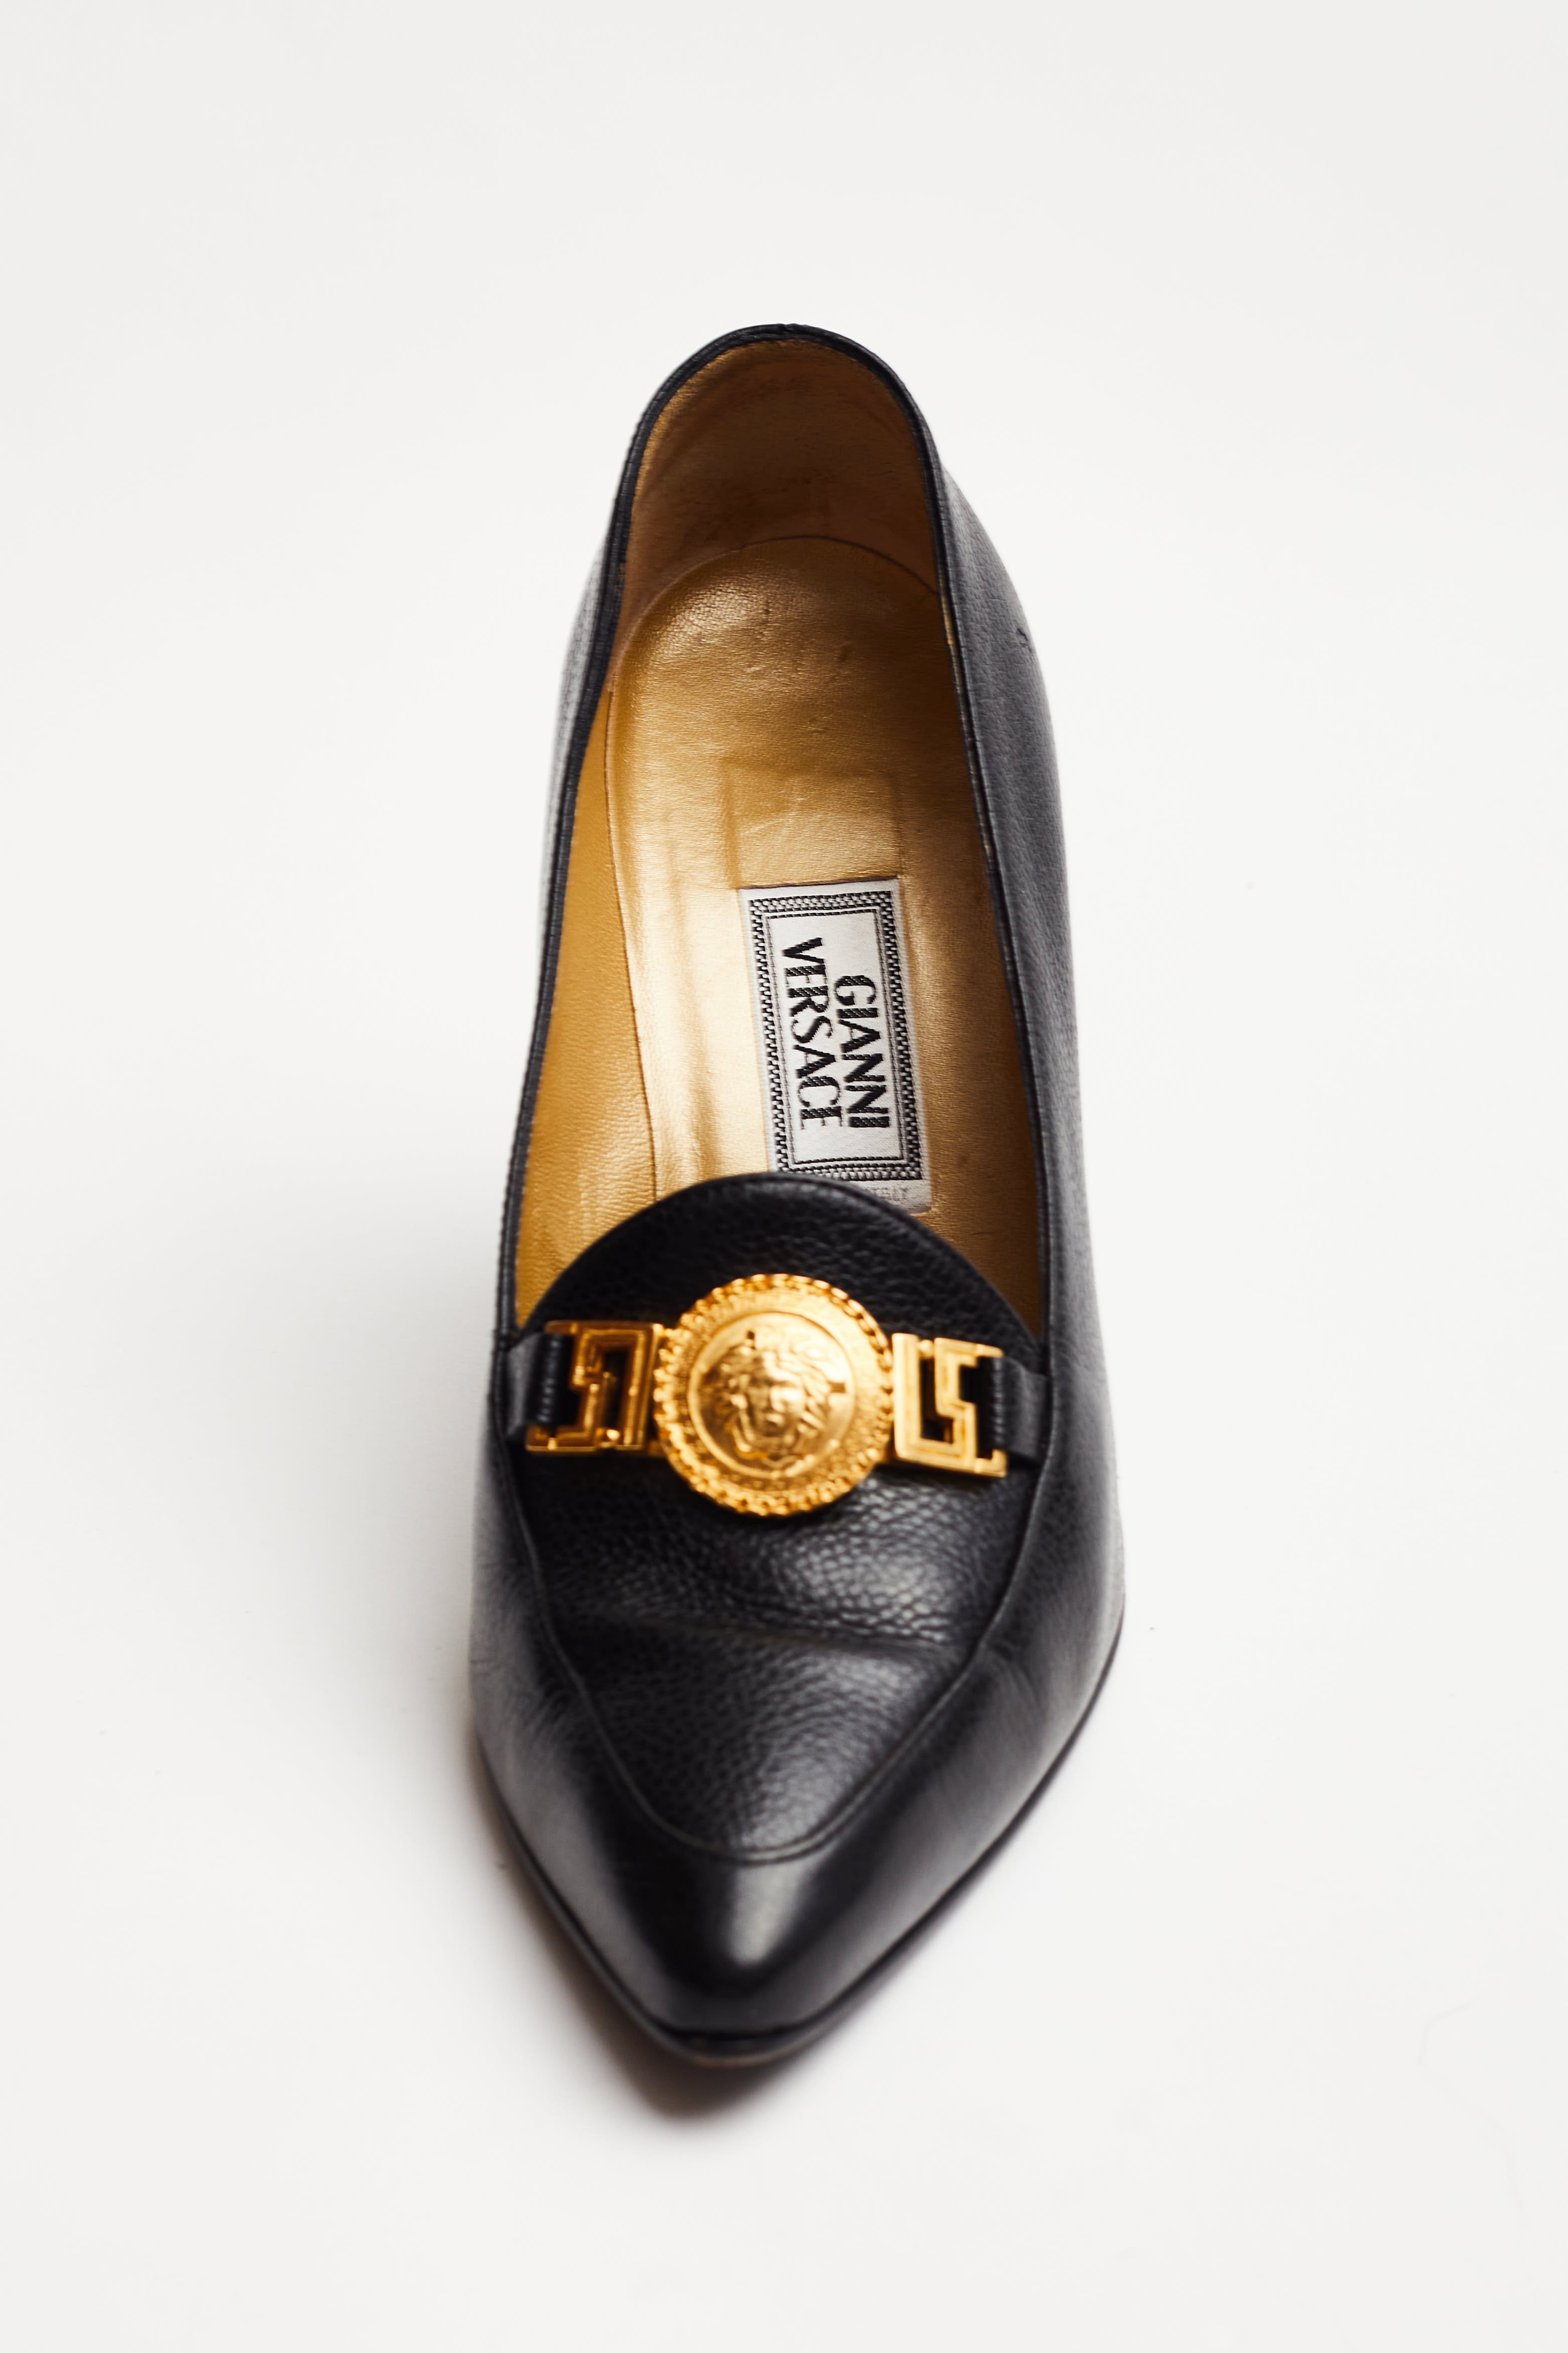 Gianni Versace <br> F/W 1994 Medusa buckle heeled loafers